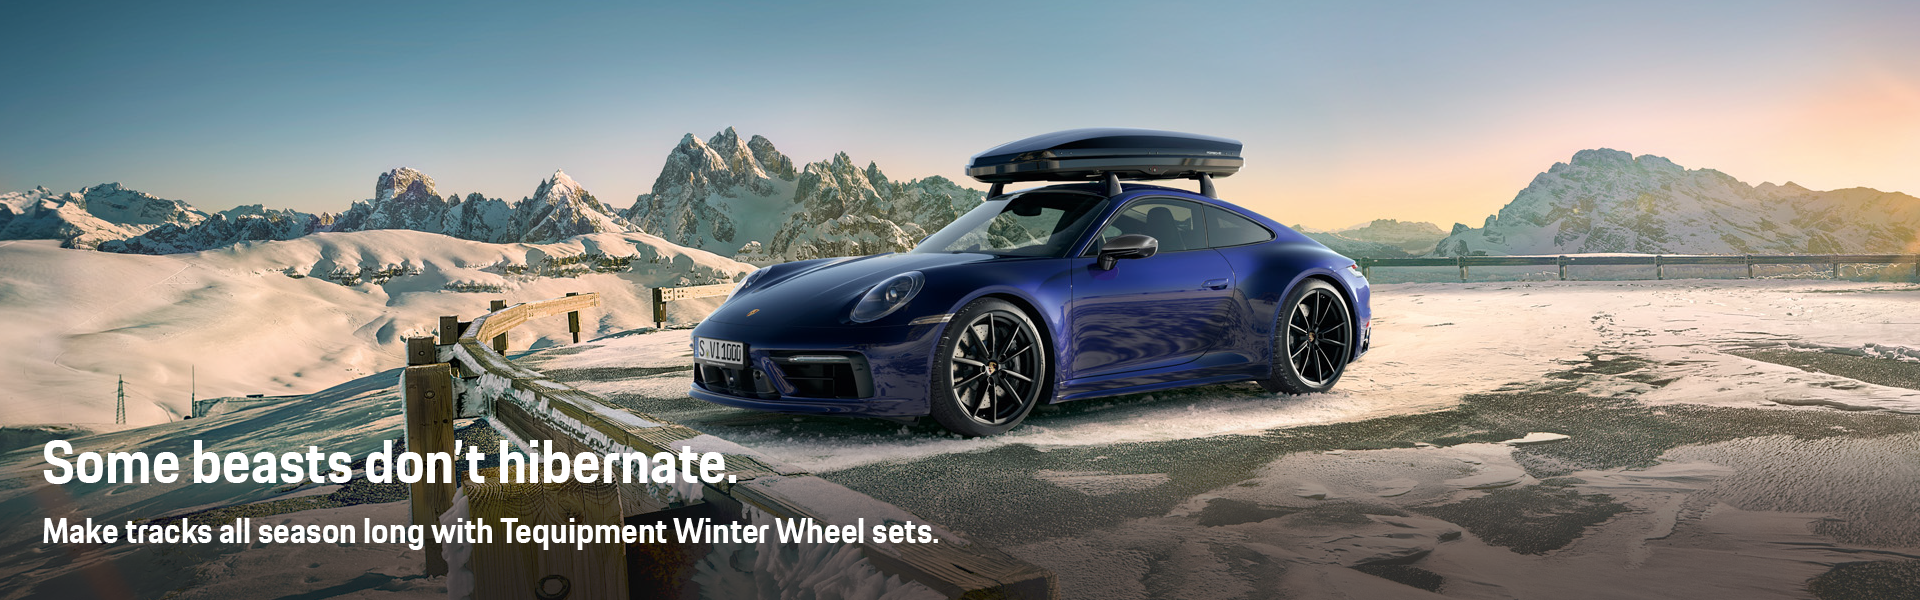 Tequipment Winter Wheel sets available at Porsche Fairfield